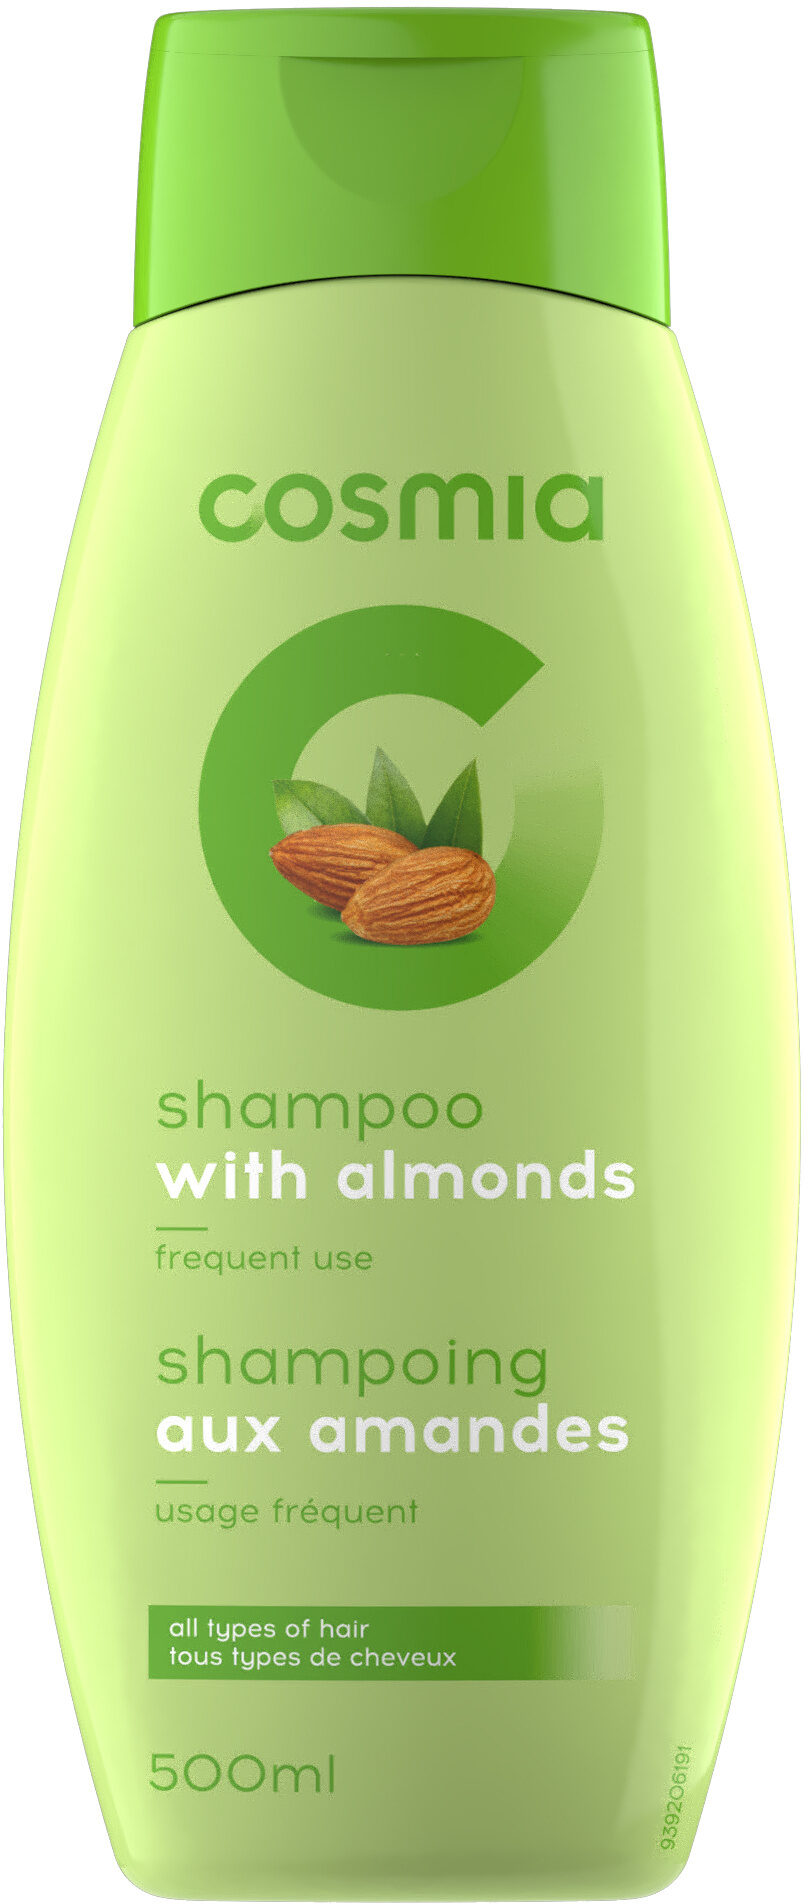 Shampoing aux amandes - 製品 - fr